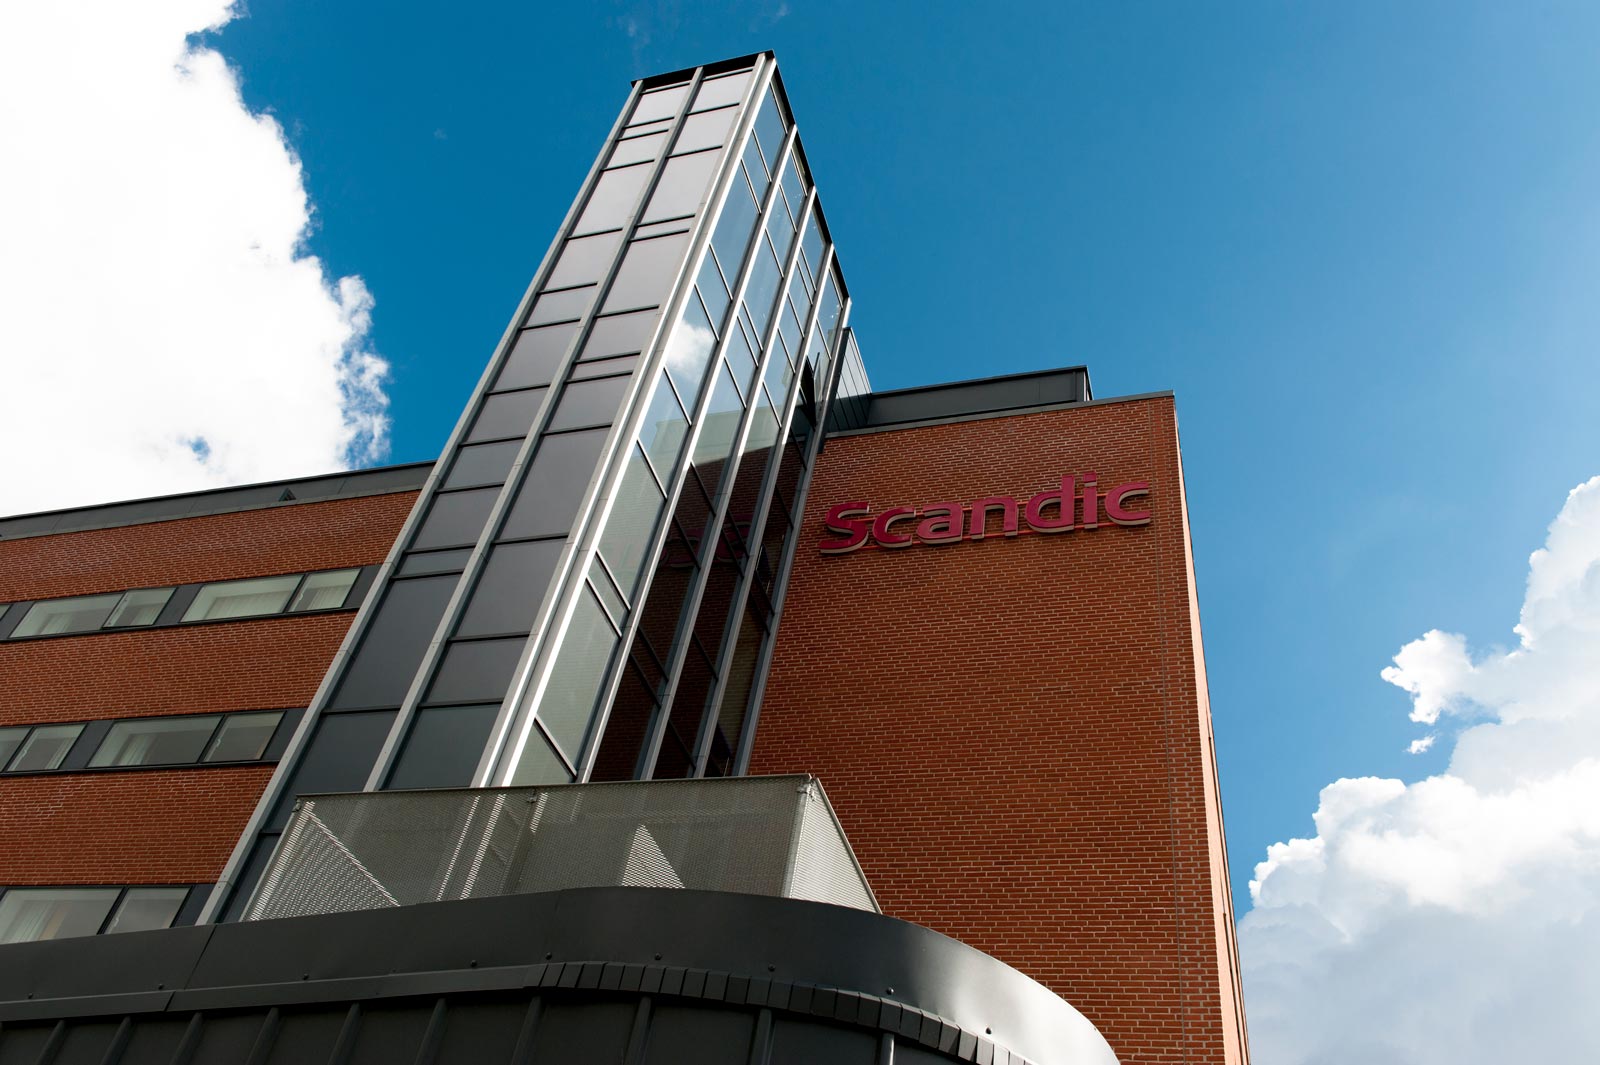 Hotel Scandic - Sydhavnen - Discreet hotel extension in Sydhavnen with elegant facade refinements